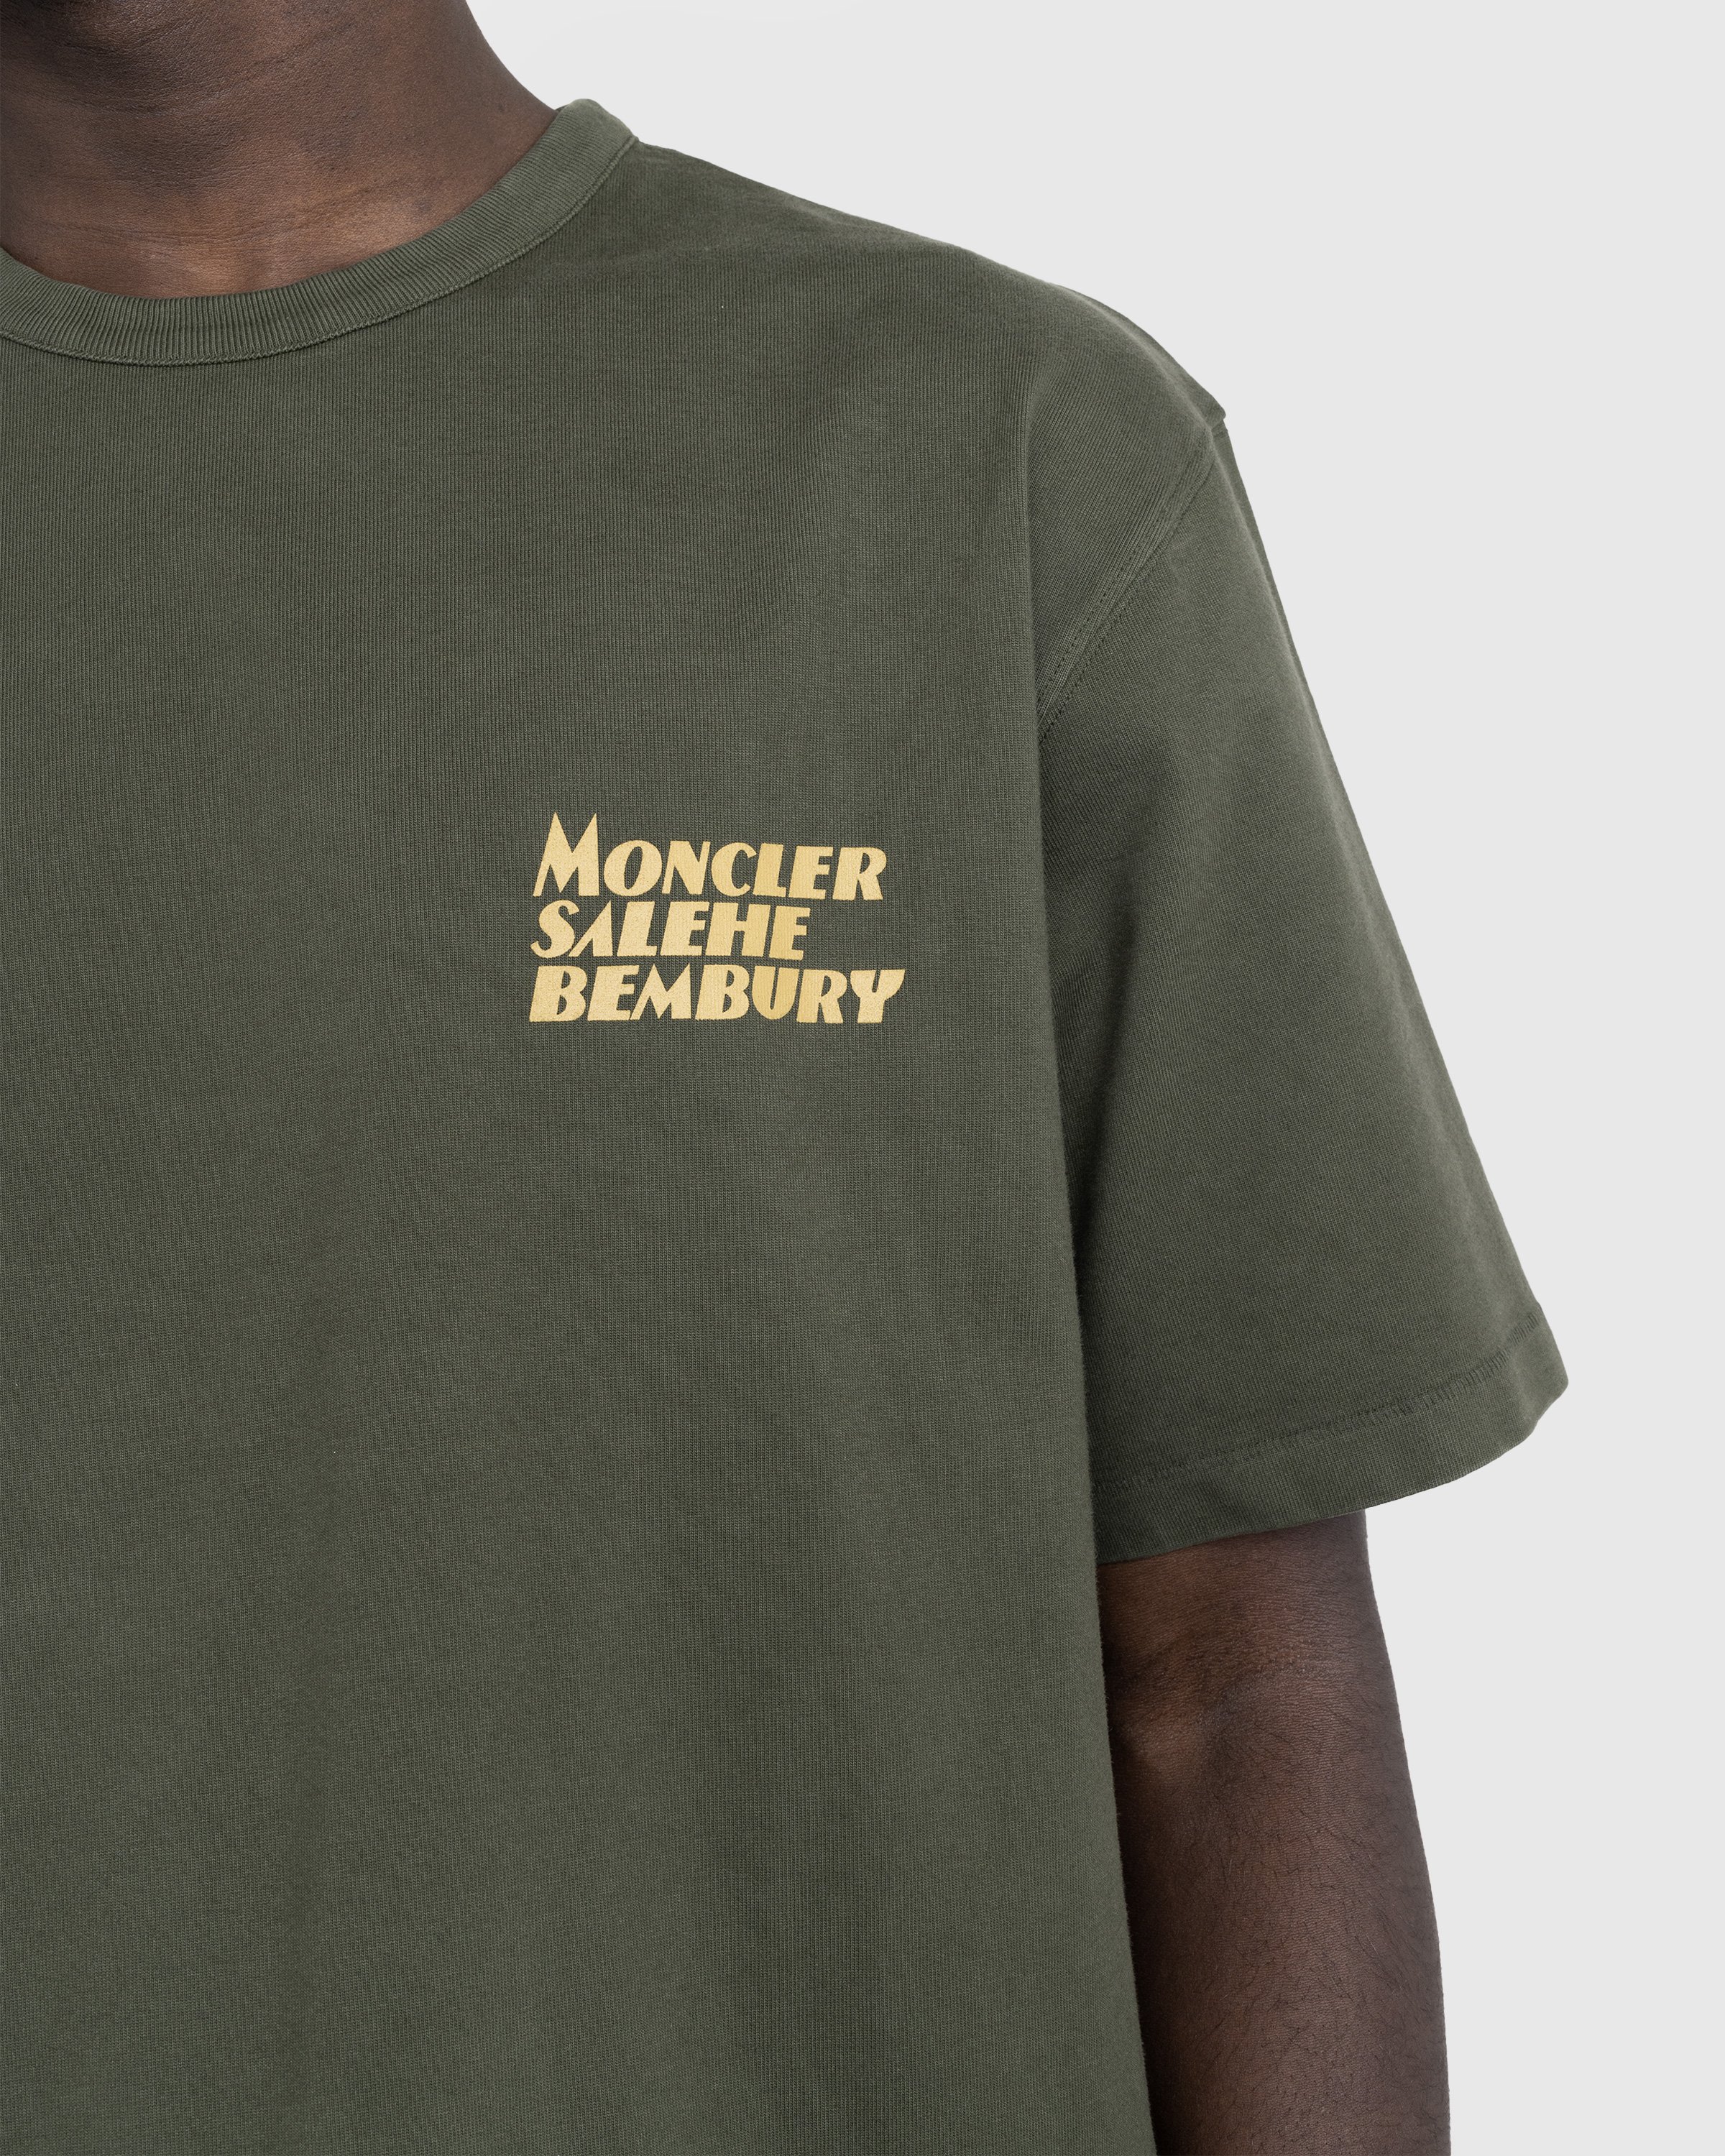 Moncler x Salehe Bembury - Logo T-Shirt Green - Clothing - Green - Image 4